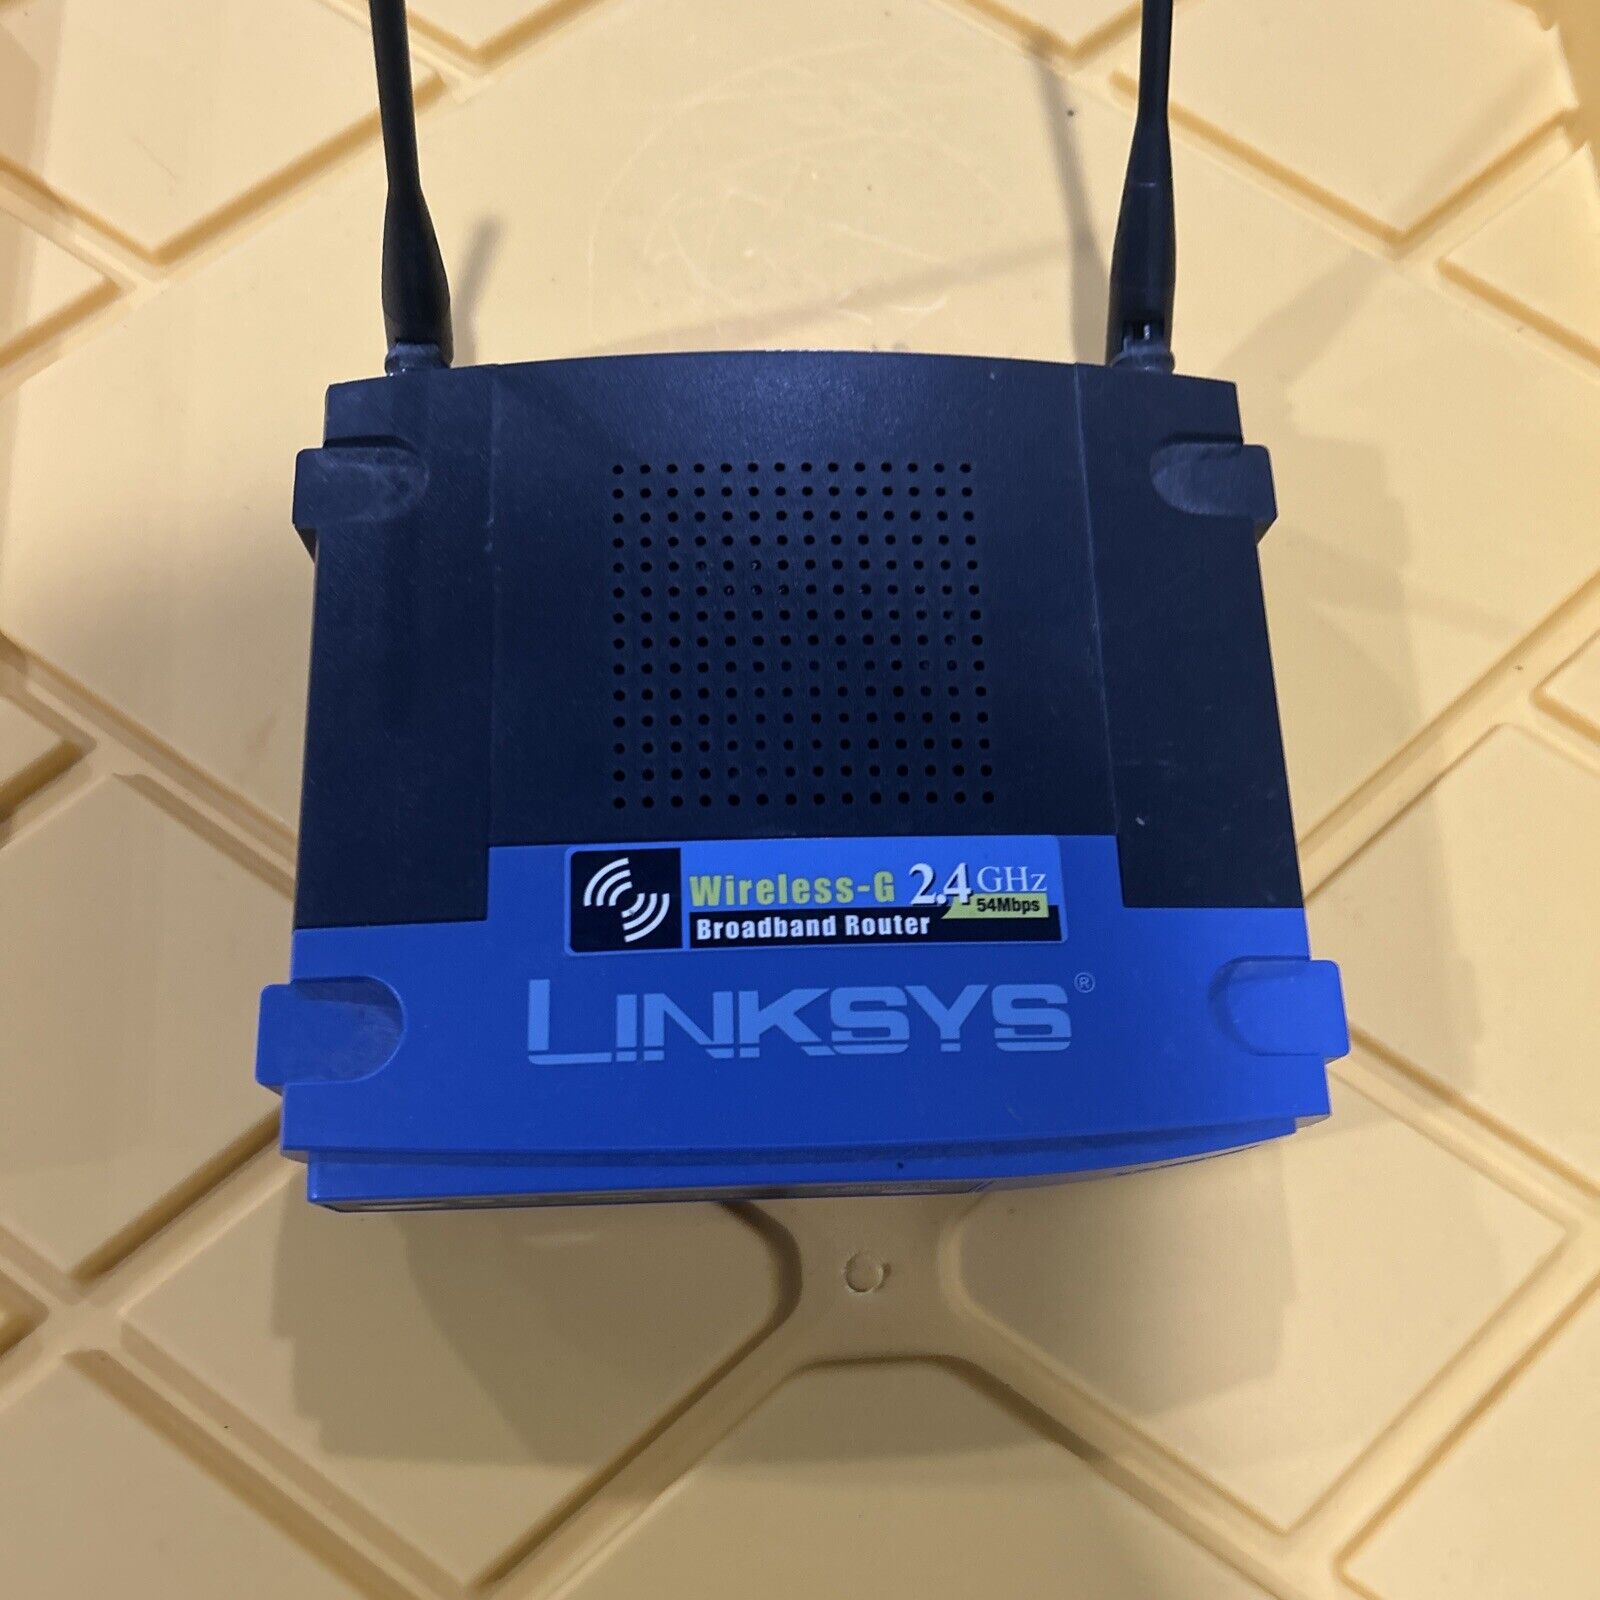 LINKSYS Wireless-G 2.4 GHz 54 Mbps 4-Port Router Model WRT54G v2.2 No Power Cord